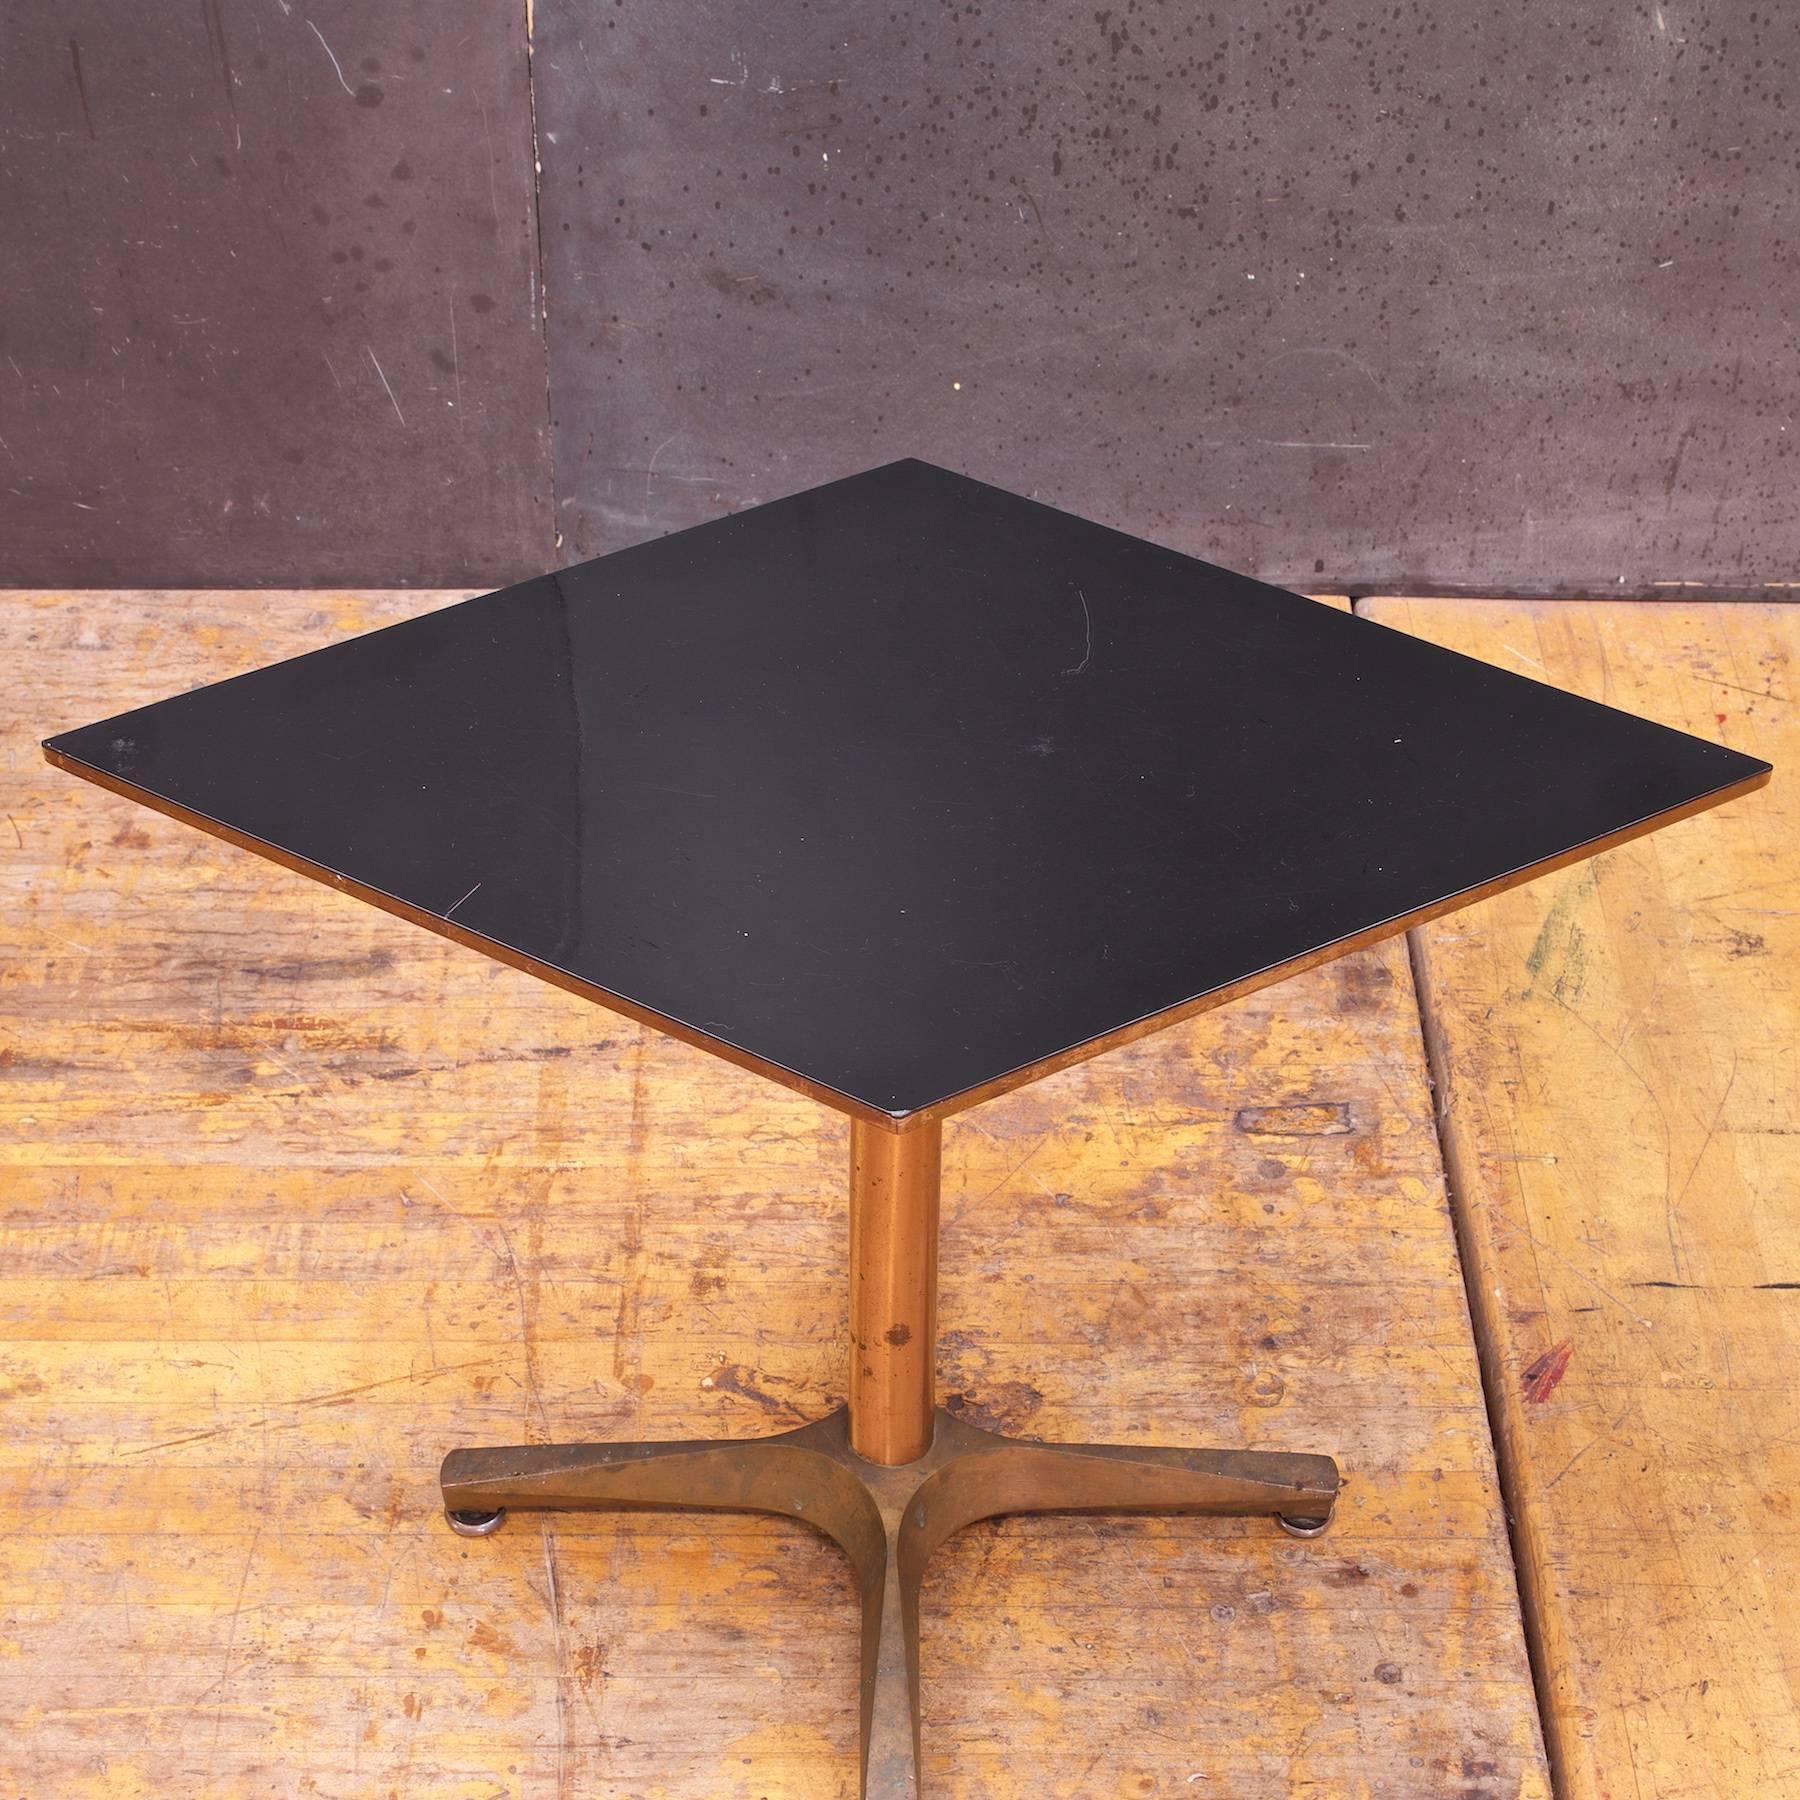 Blackened Hollywood Regency Black Bronze Diamond Side Table Pedestal Modernist Geometric